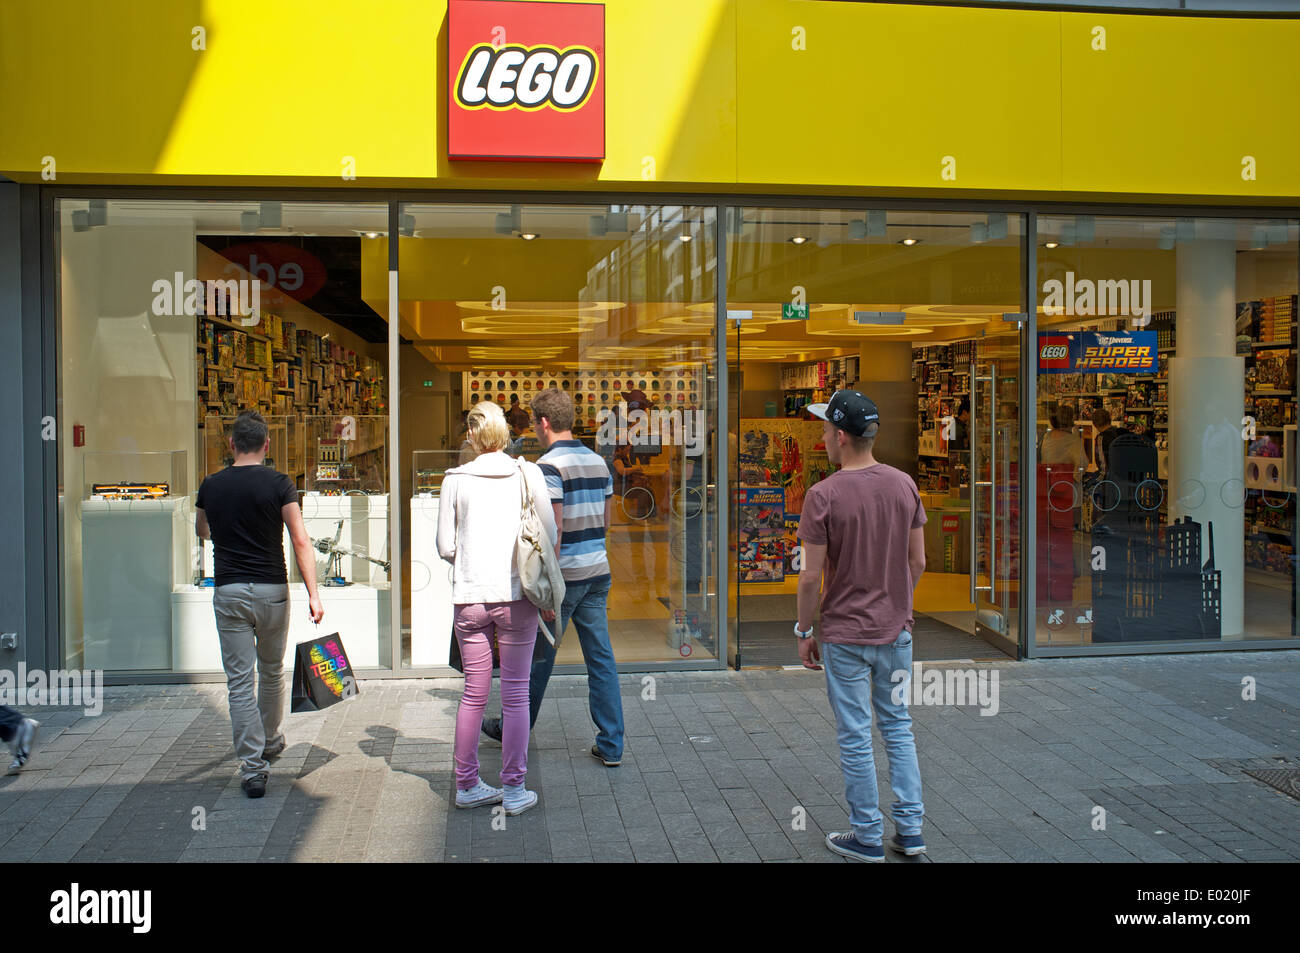 Lego shop Cologne, Germany Stock Photo - Alamy